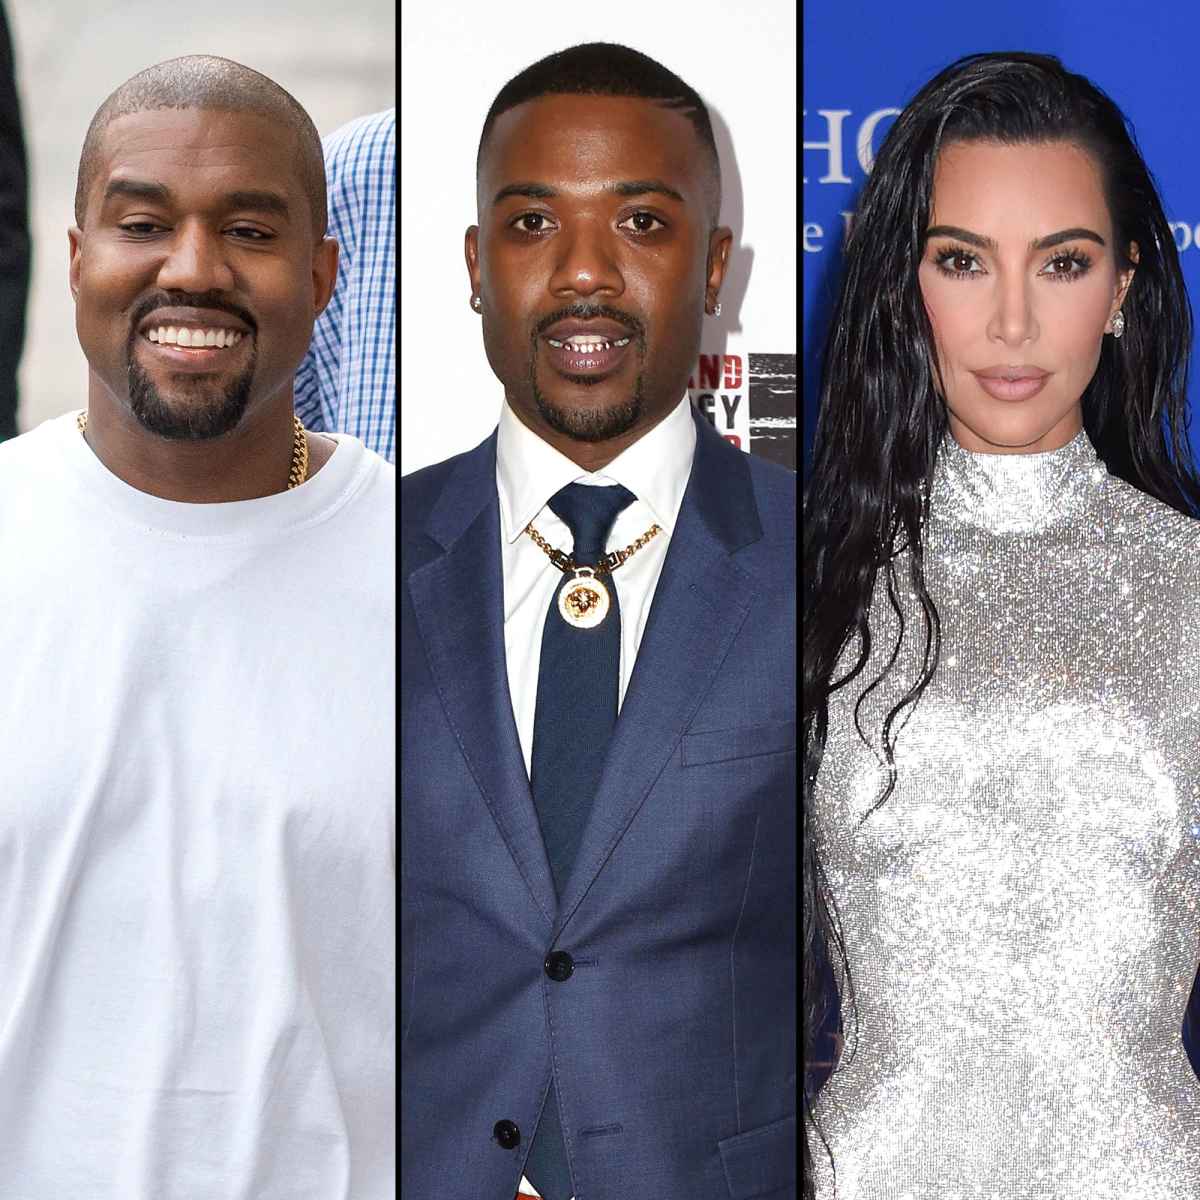 Kanye West and Ray J Reunite at a Red Carpet Following Kim Kardashian Sex Tape Drama